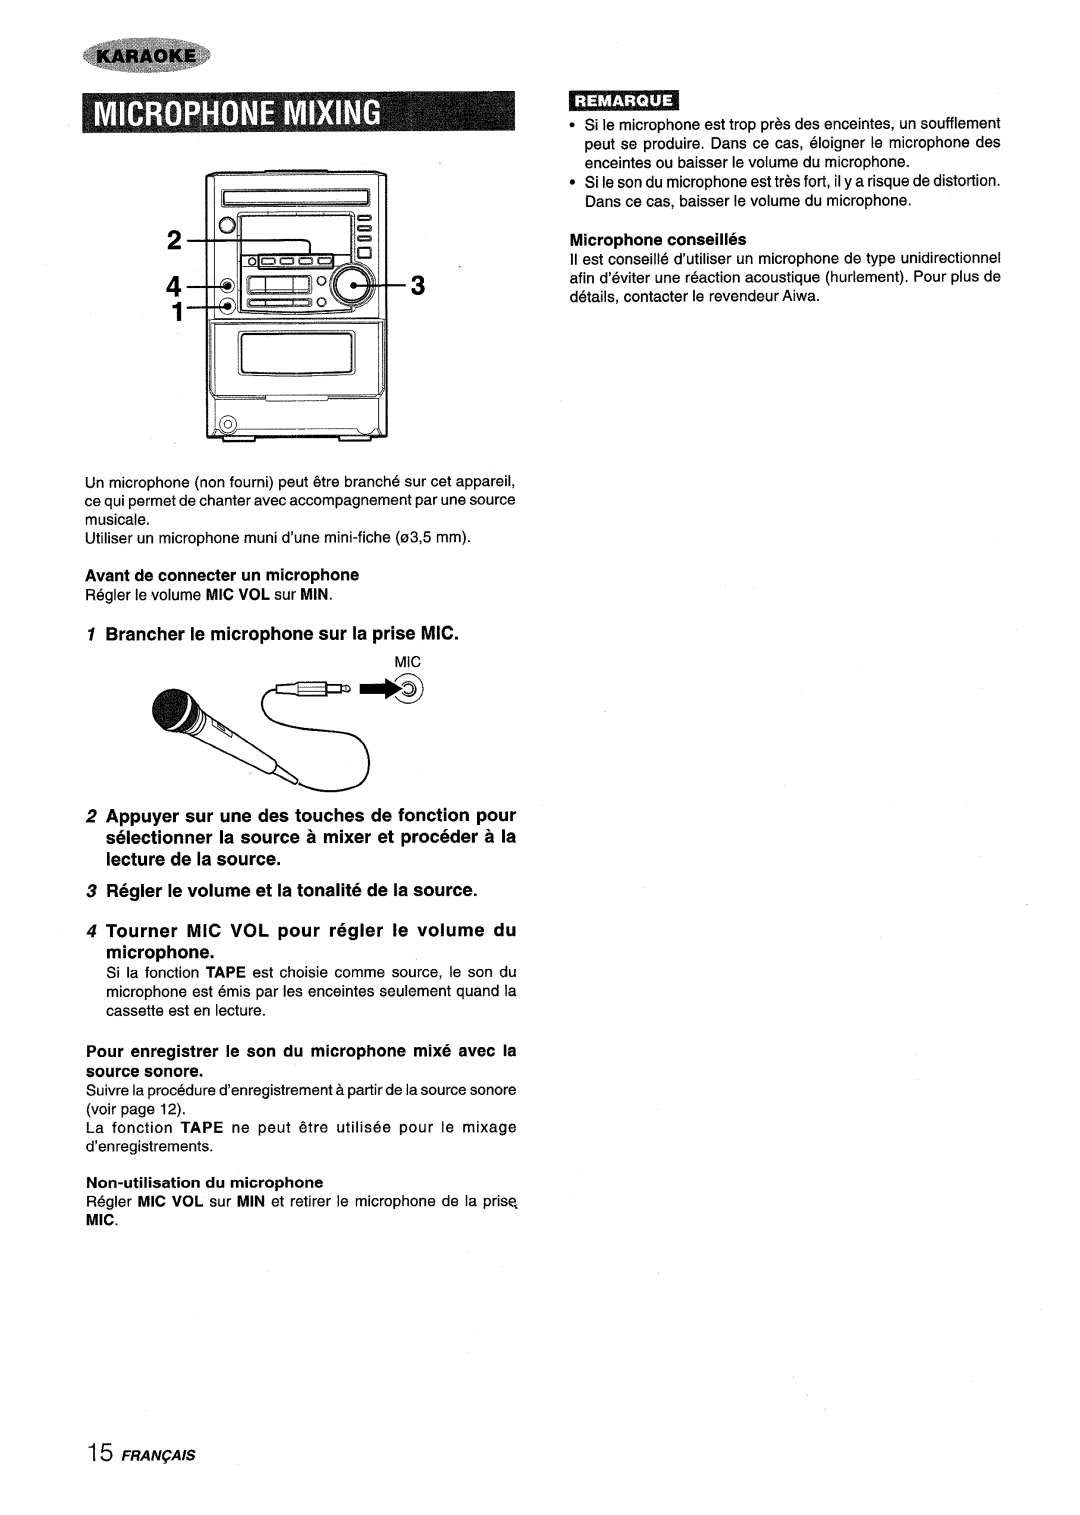 Aiwa XM-M25 manual Microphone conseilles, Avant de connecter un microphone, Brancher Ie microphone sur la prise MIC 